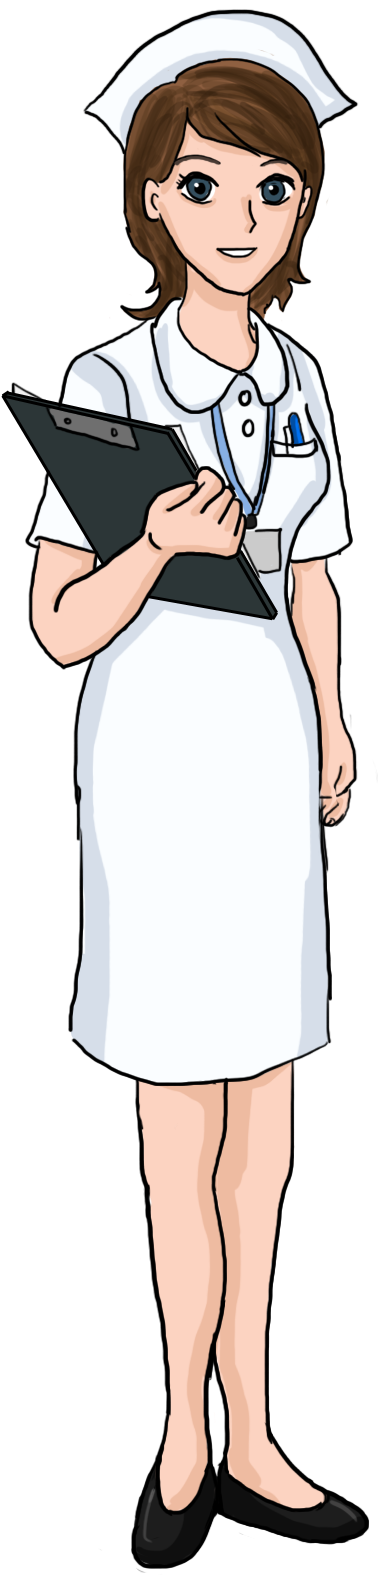 Professional Nurse Cartoon Character PNG